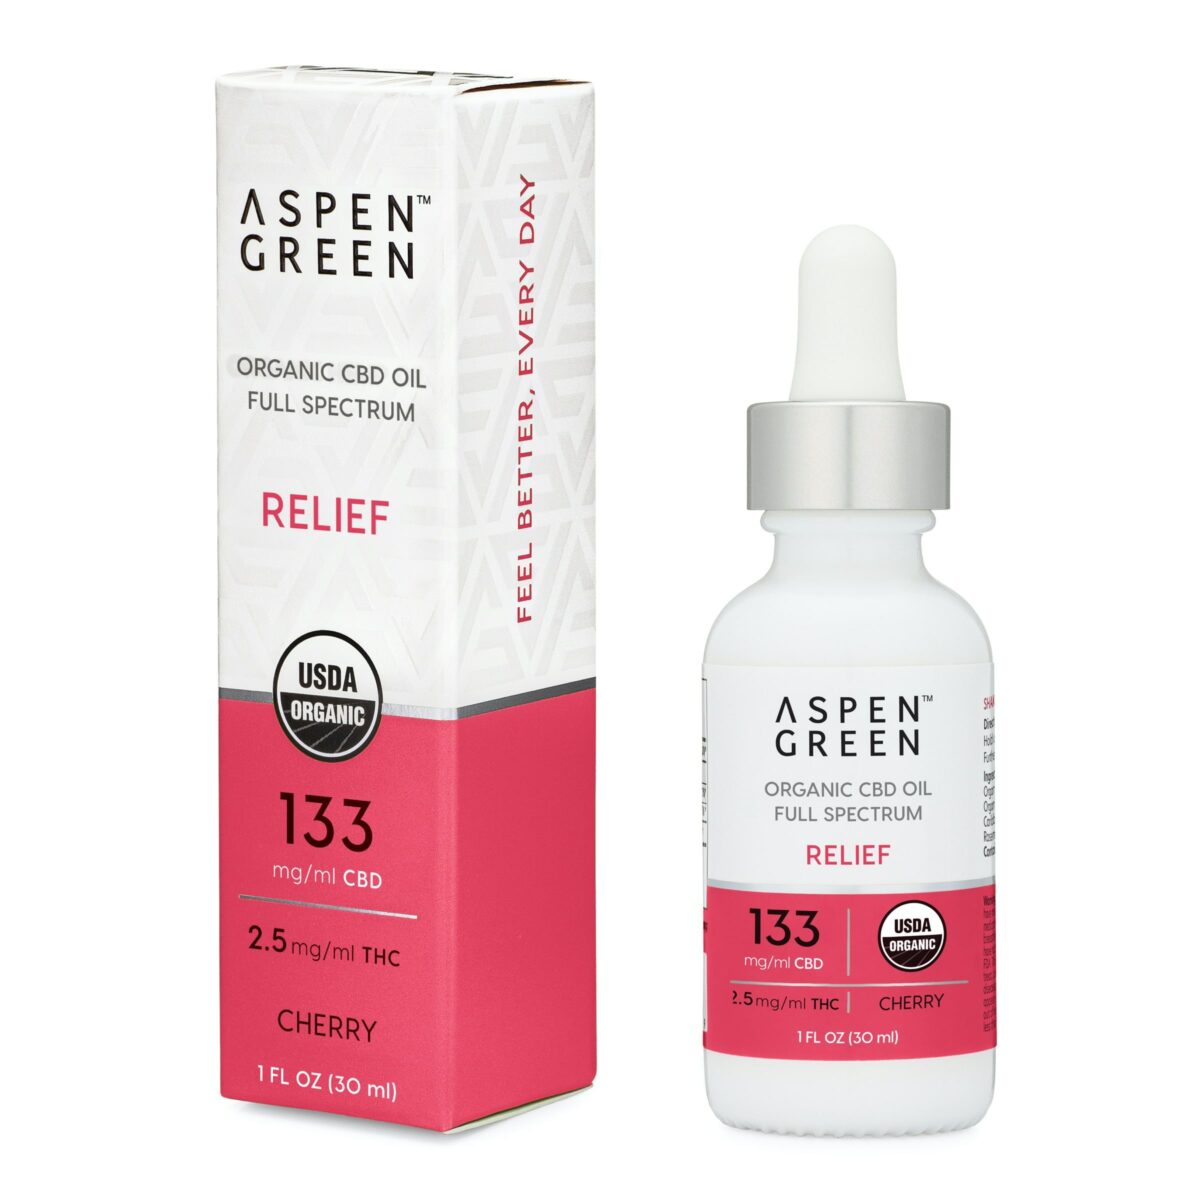 Aspen Green USDA Certified Organic CBD Oil, Relief (133mg/ml CBD), Cherry Flavor